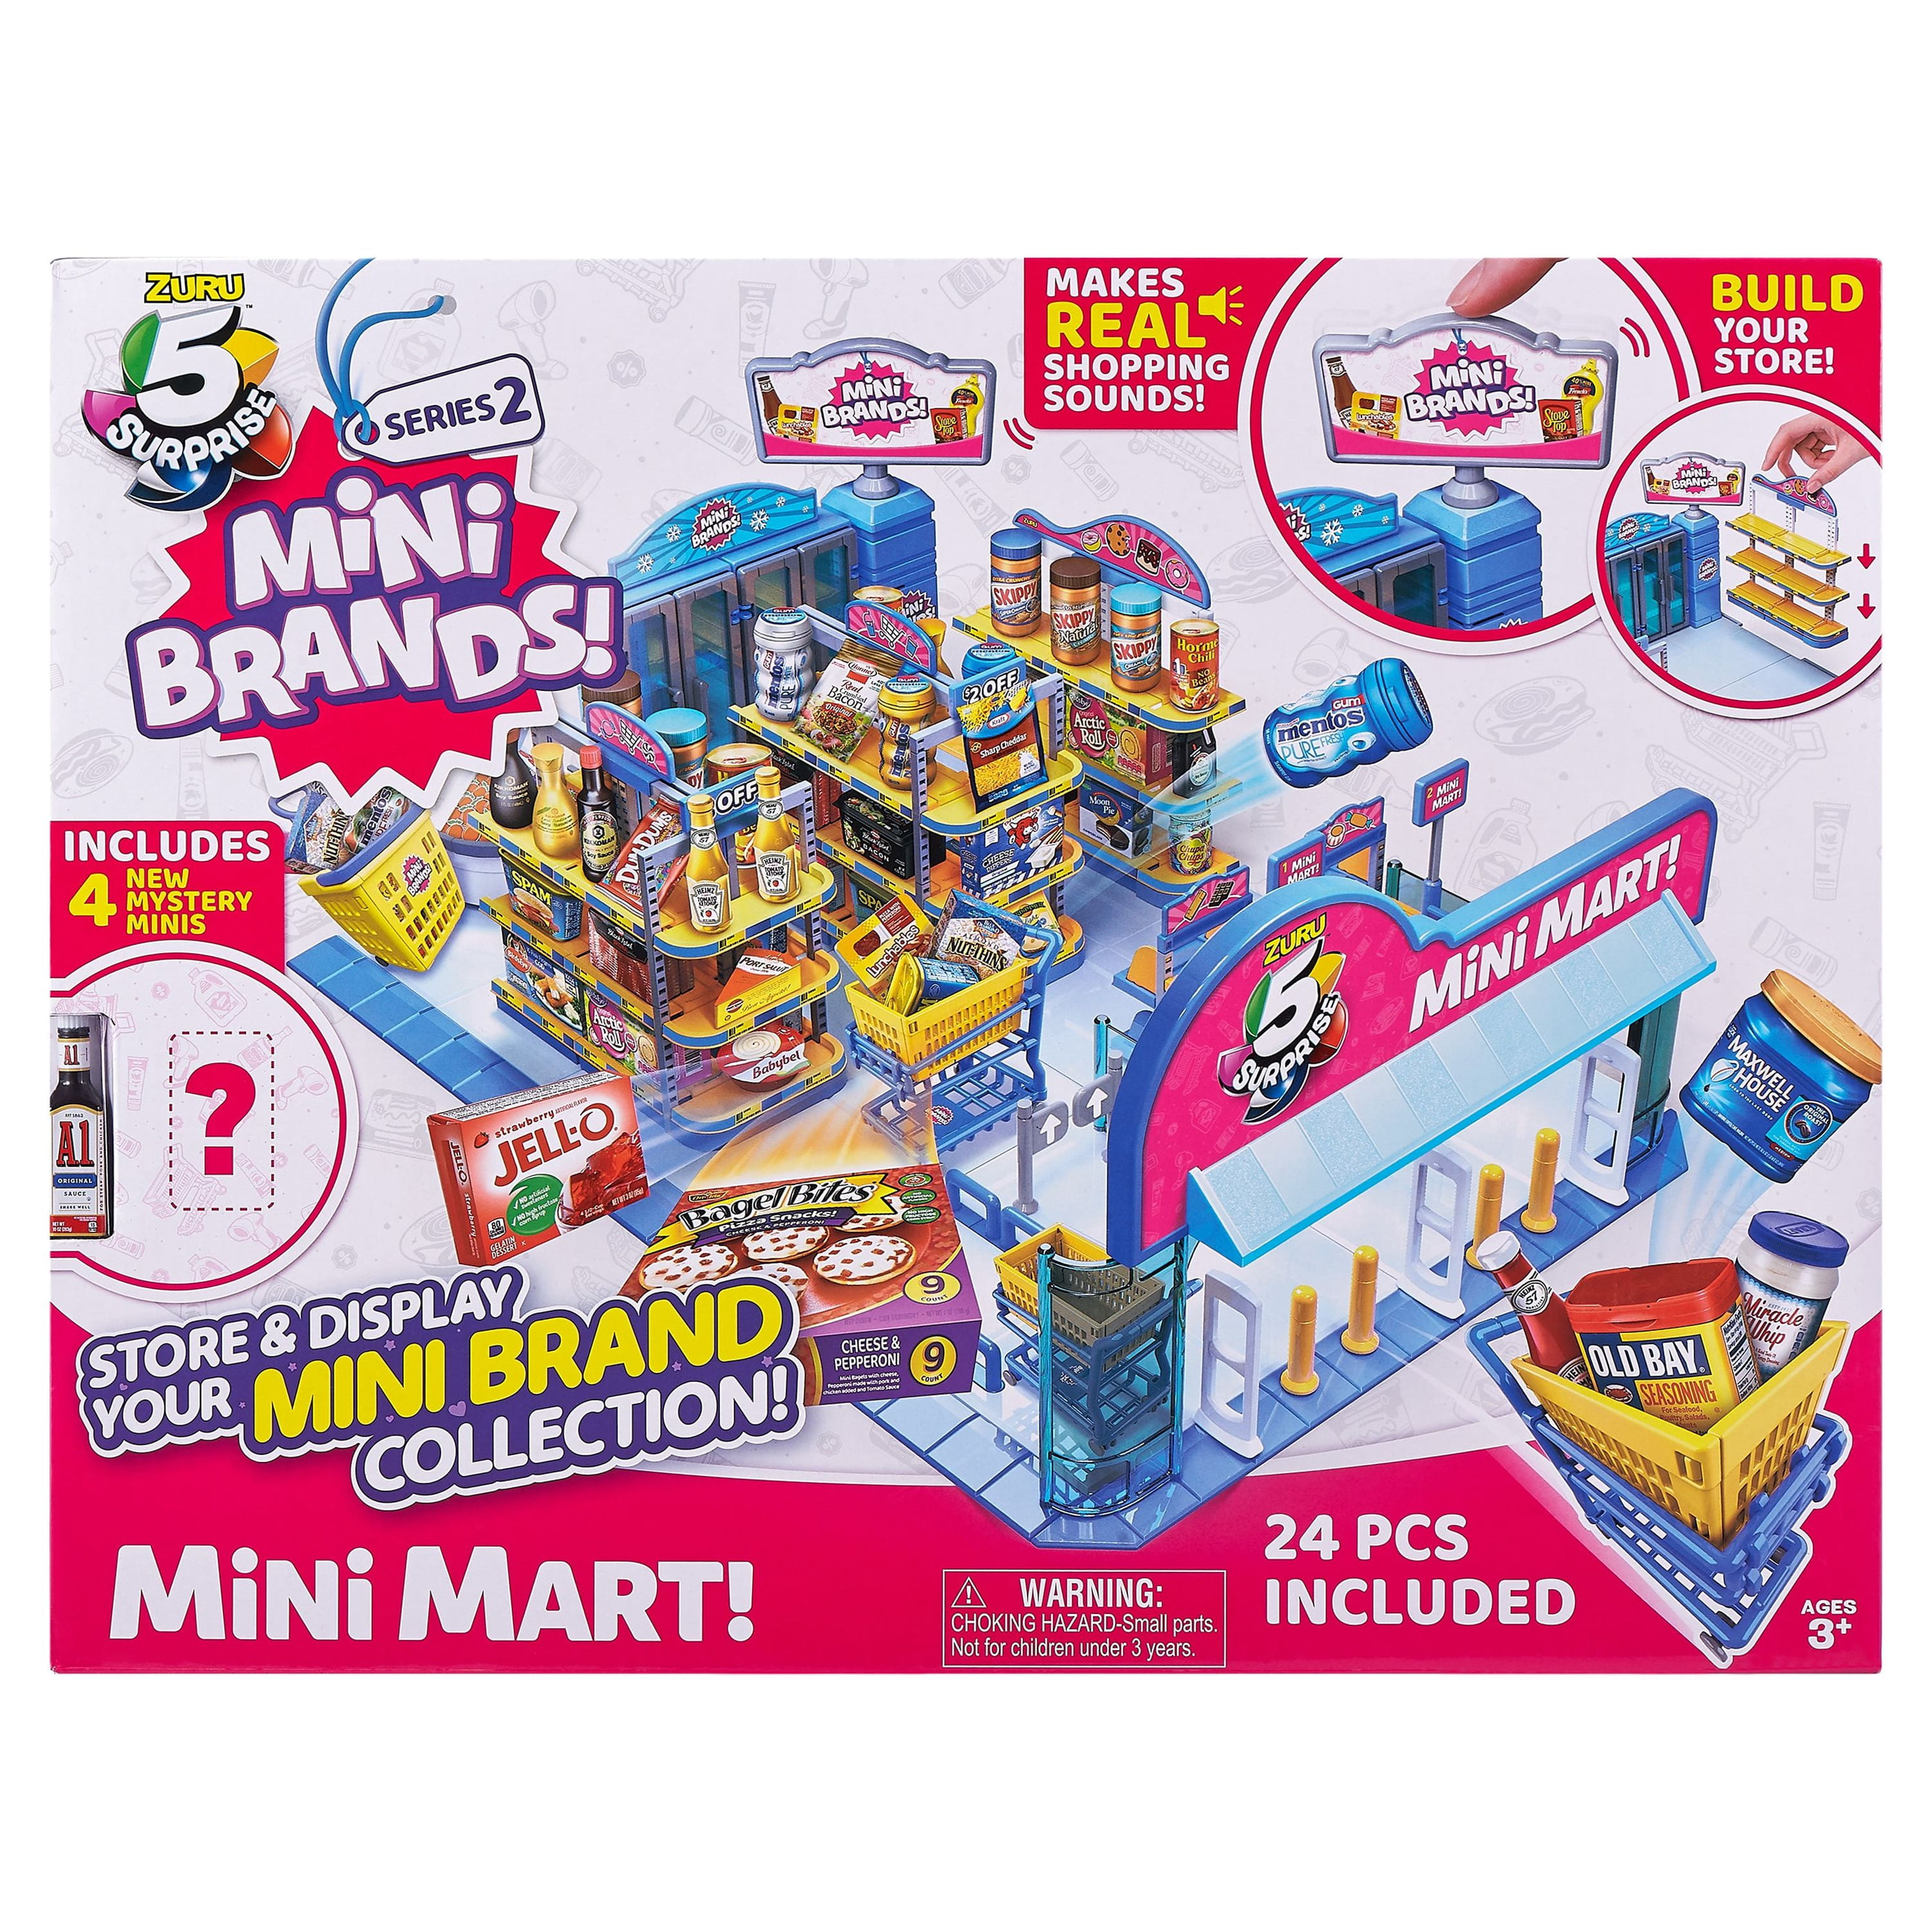 Mini Brands Series 4 (1 of 2)